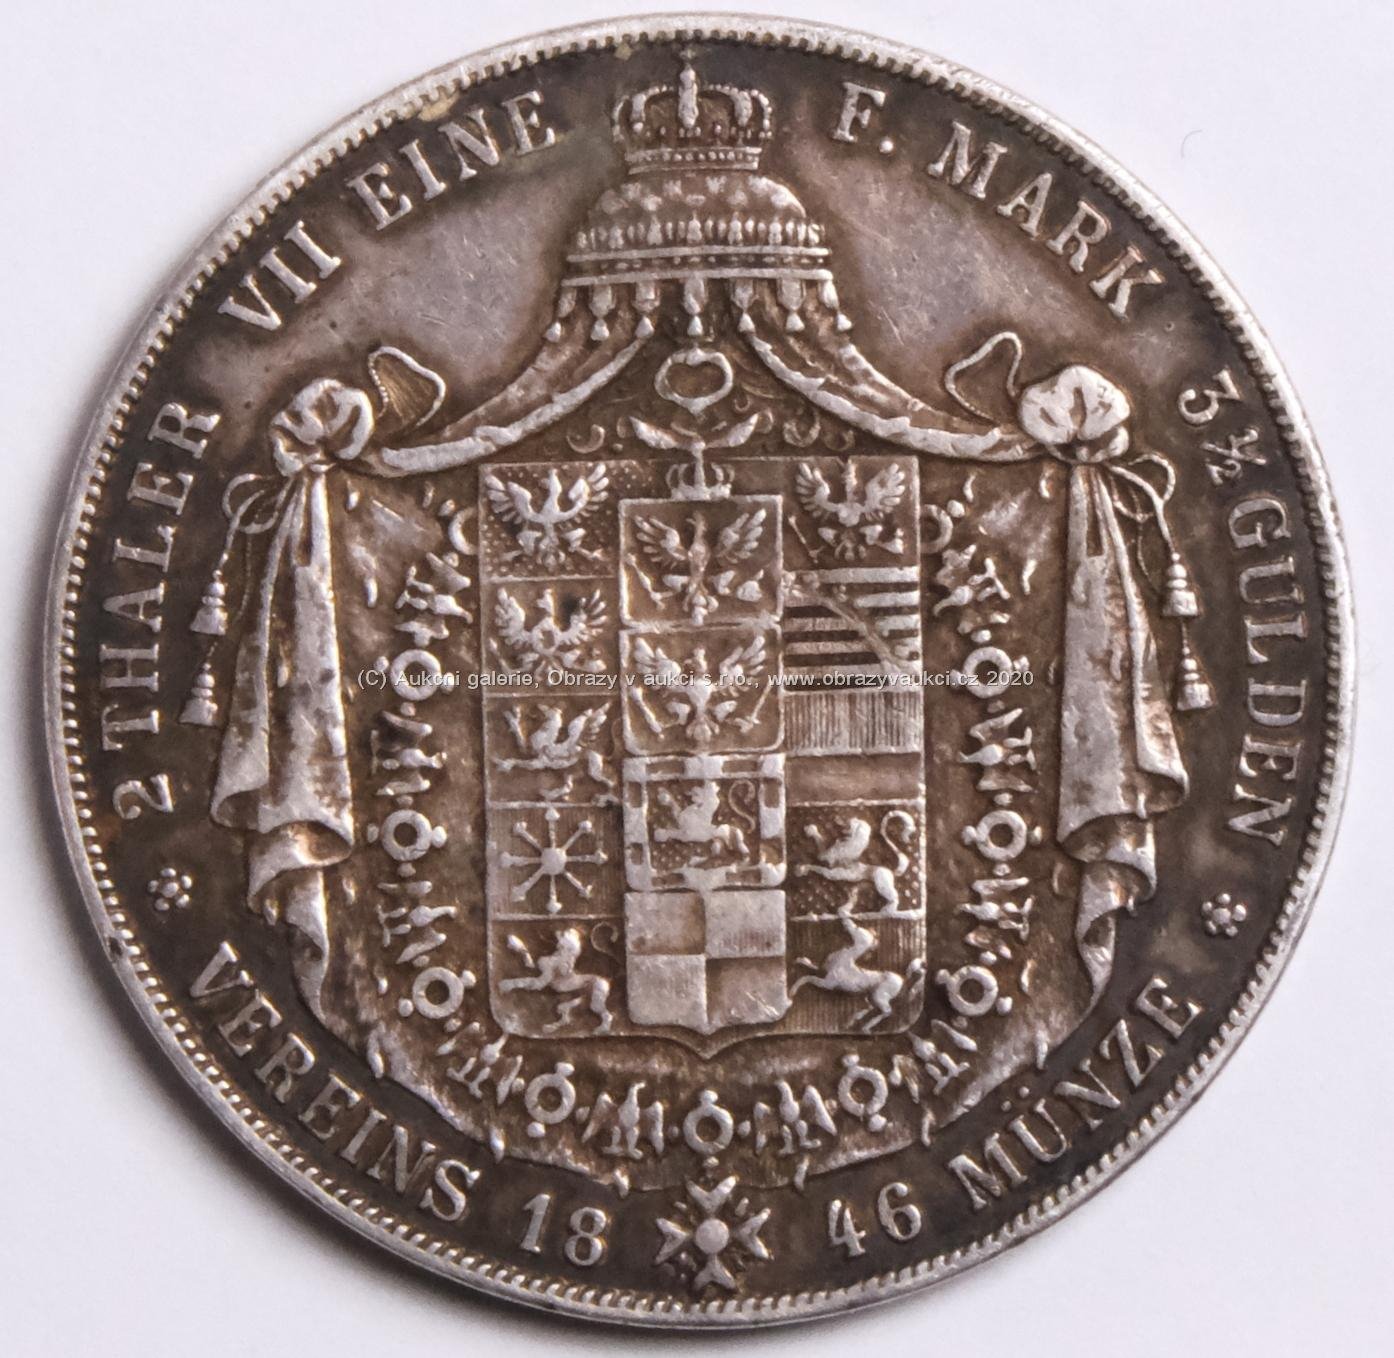  Friedrich Wilhelm IV. - 2 tolary - stříbro 900/1000, hrubá hmotnost mince 37,06 g